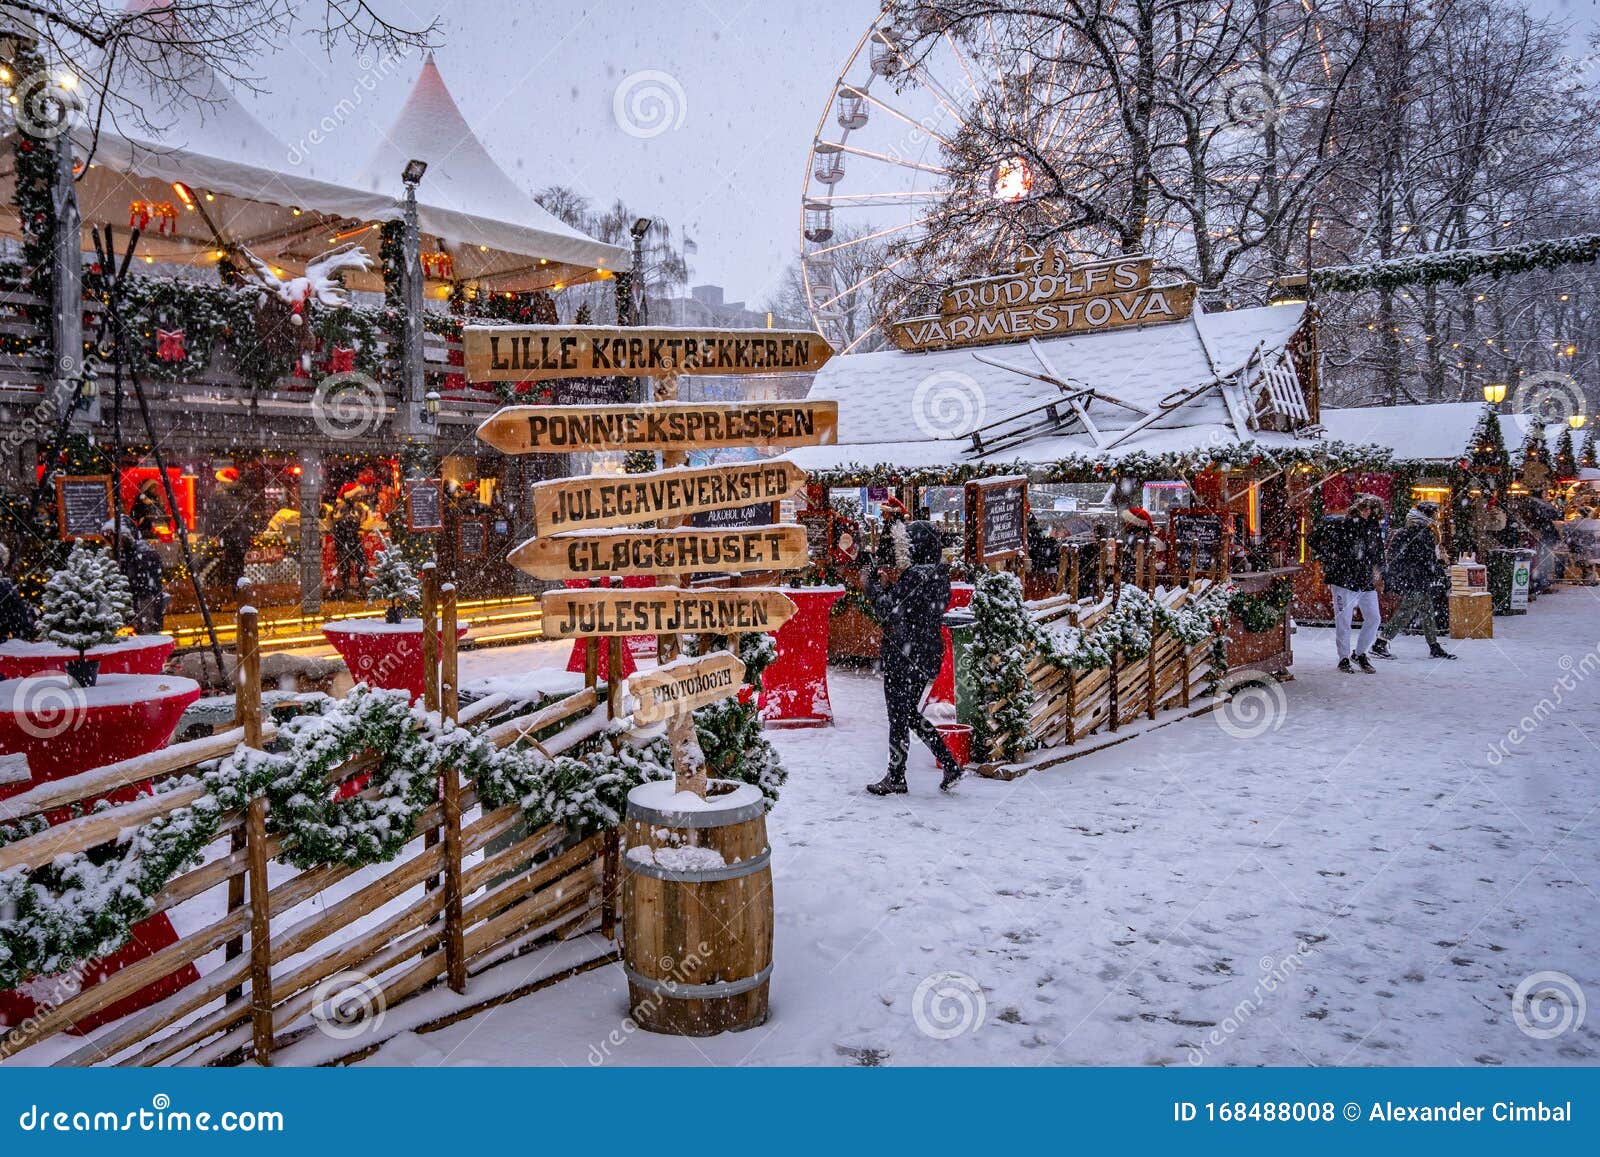 norwegian winter celebrations clipart